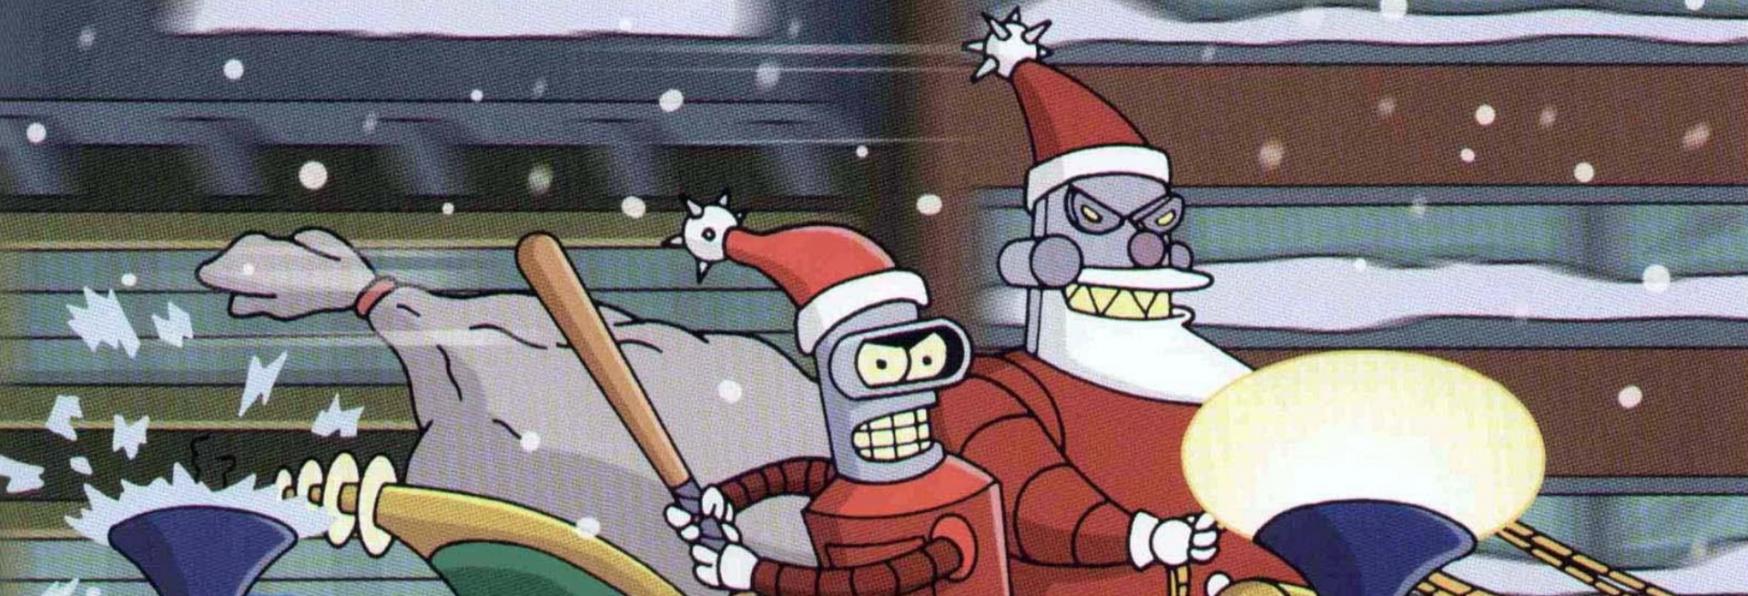 Futurama: Revival will reveal the Secret origin of Santa Claus Robot